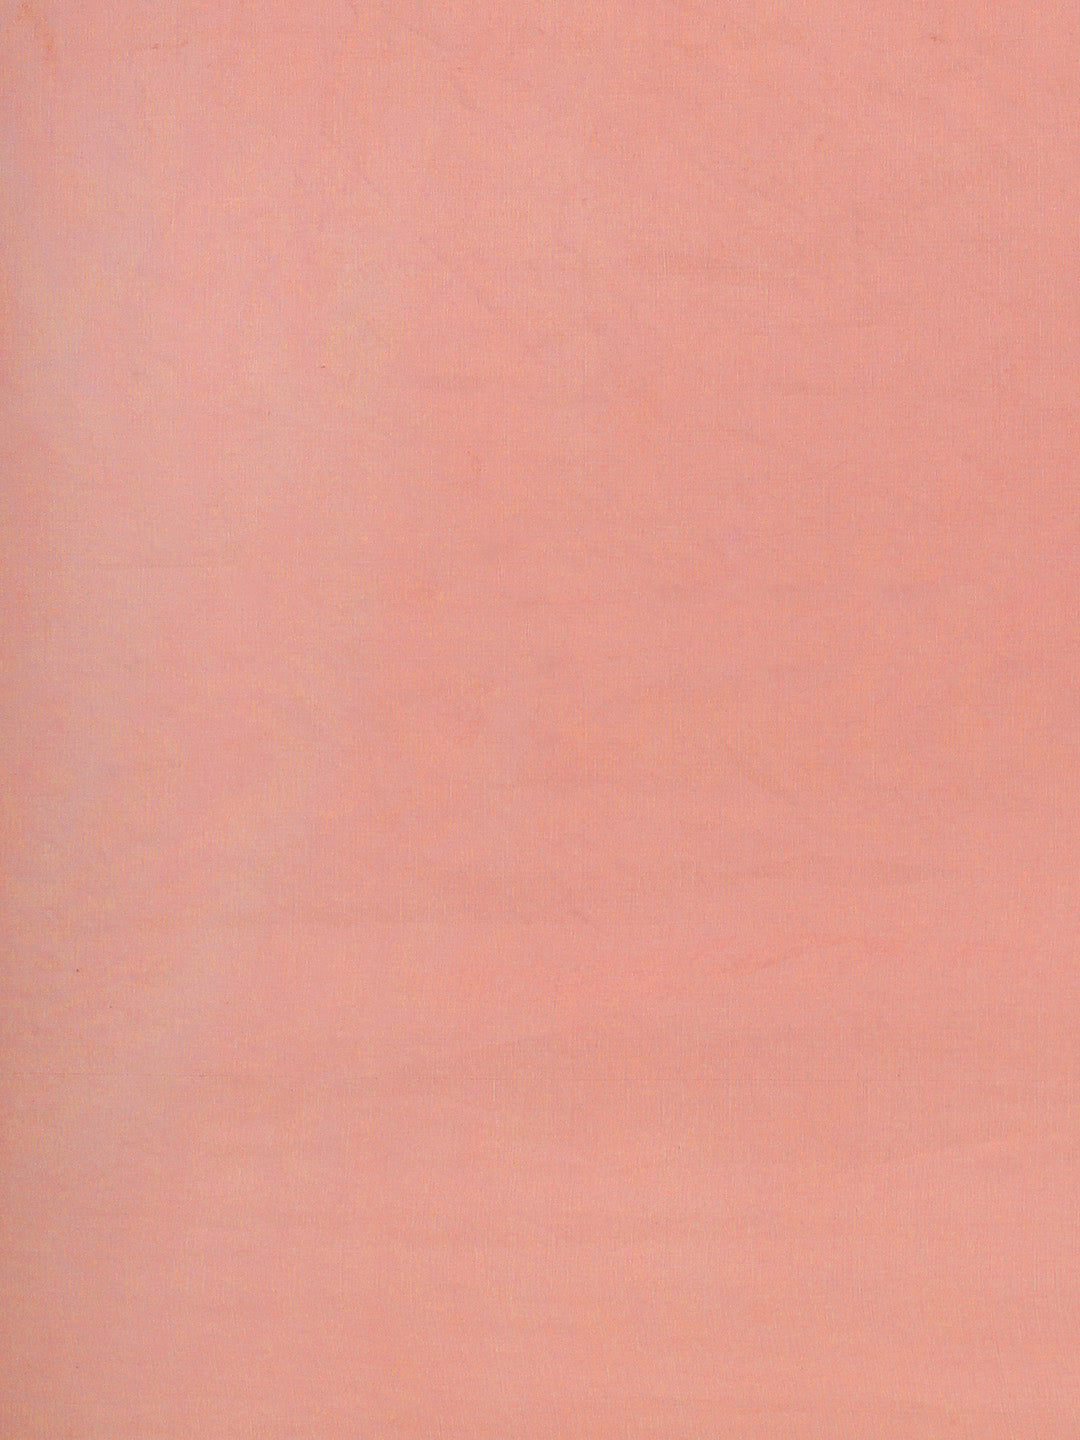 Rust Red Hand Painted Hand Painted Organza Saree-Saree-Kalakari India-BHKPSA0122-Hand Painted, Organza, Sarees, Sustainable Fabrics, Traditional Weave-[Linen,Ethnic,wear,Fashionista,Handloom,Handicraft,Indigo,blockprint,block,print,Cotton,Chanderi,Blue, latest,classy,party,bollywood,trendy,summer,style,traditional,formal,elegant,unique,style,hand,block,print, dabu,booti,gift,present,glamorous,affordable,collectible,Sari,Saree,printed, holi, Diwali, birthday, anniversary, sustainable, organic, sc